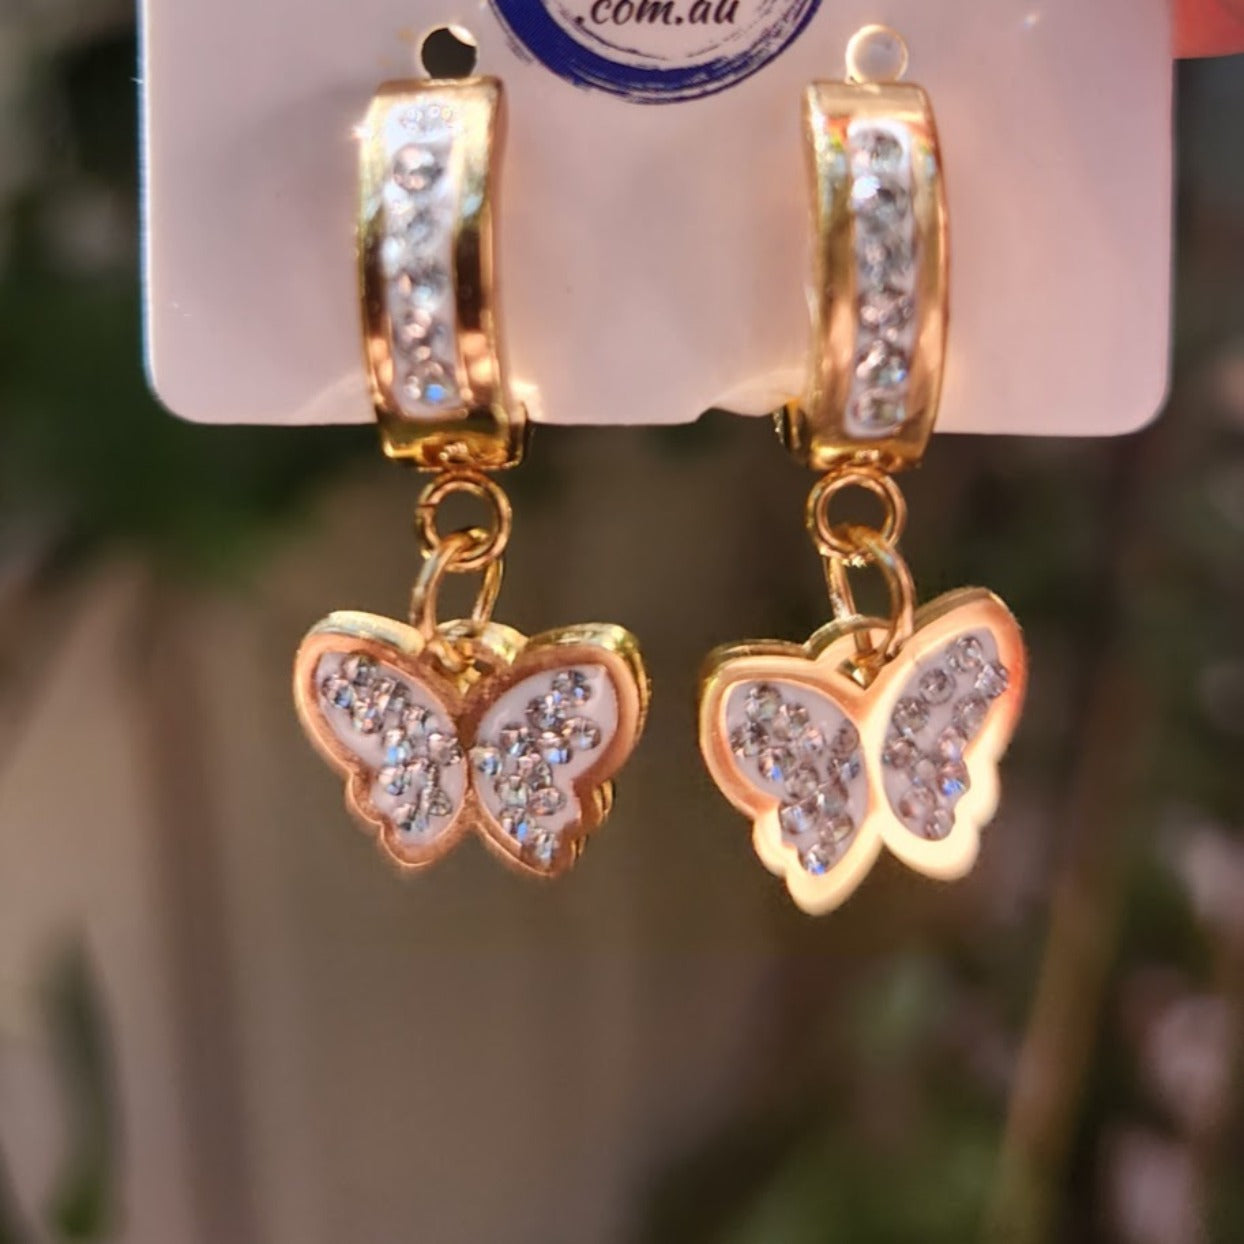 GOLDEN BUTTERFLIES -  GOLD CUBIC ZIRCONIA WATERPROOF HUGGIE EARRINGS - Premium earrings from www.beachboho.com.au - Just $45! Shop now at www.beachboho.com.au